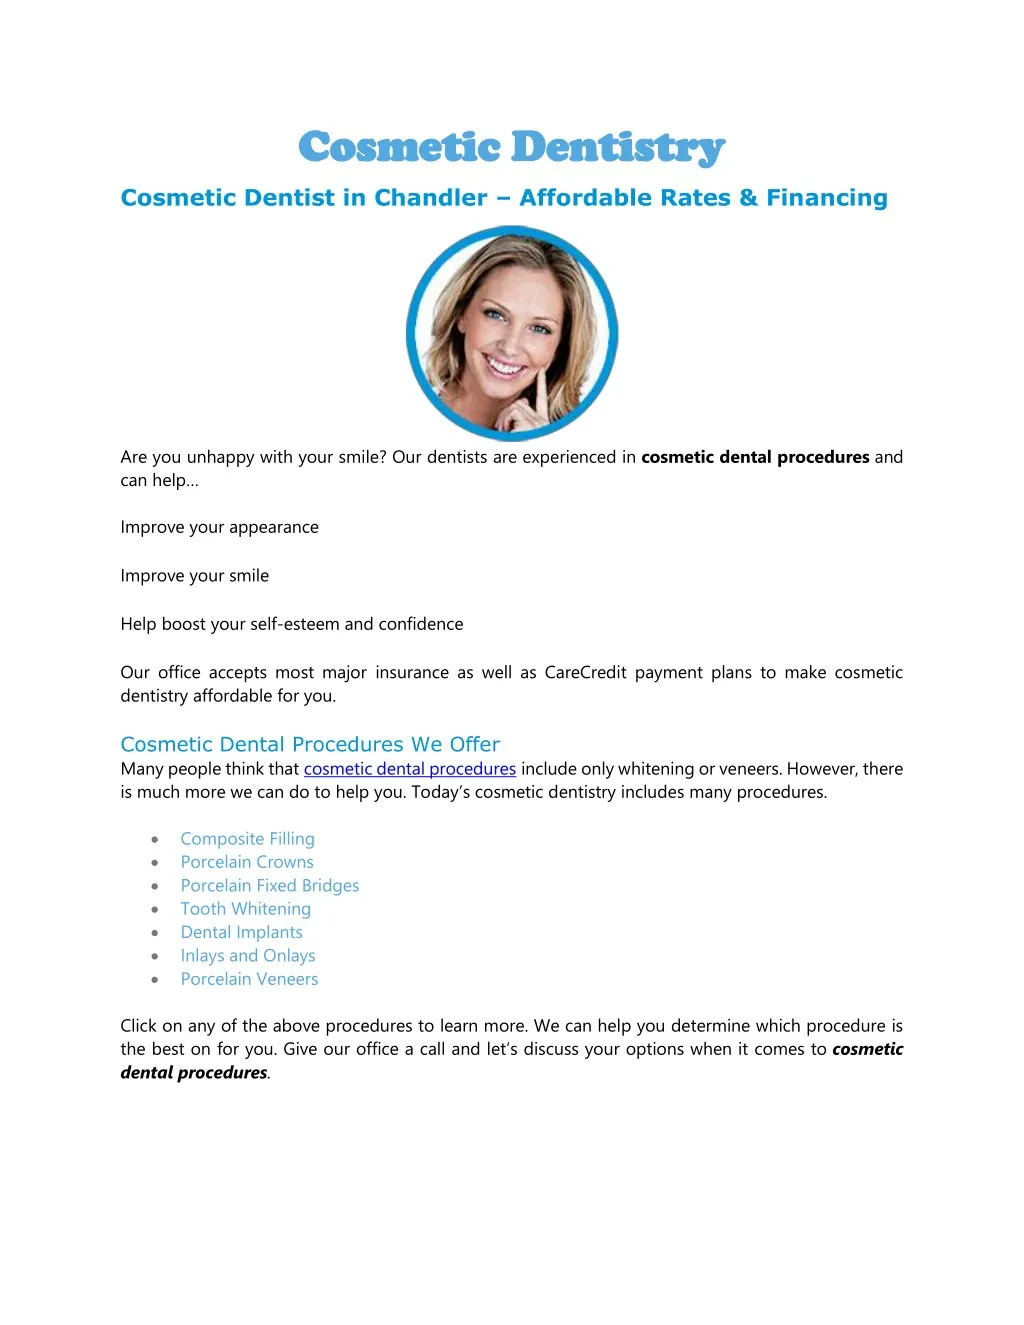 cosmetic dentistr cosmetic dentistry y